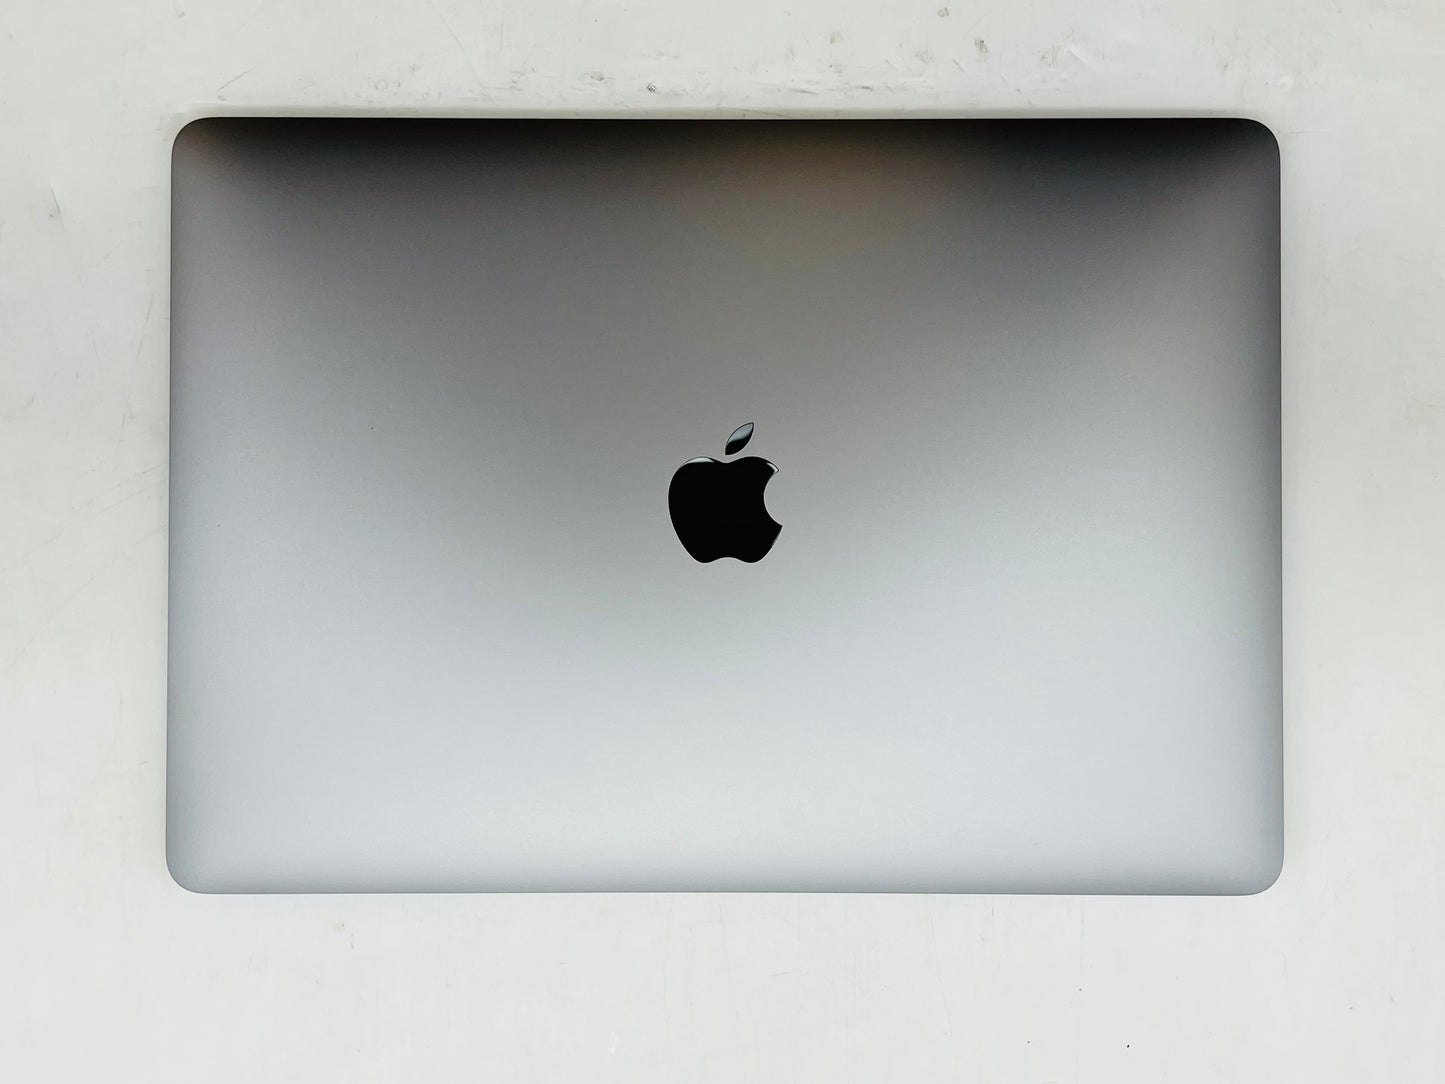 Apple 2020 MacBook Air M1 3.2GHz (8-Core GPU) 8GB RAM 512GB SSD - Very good